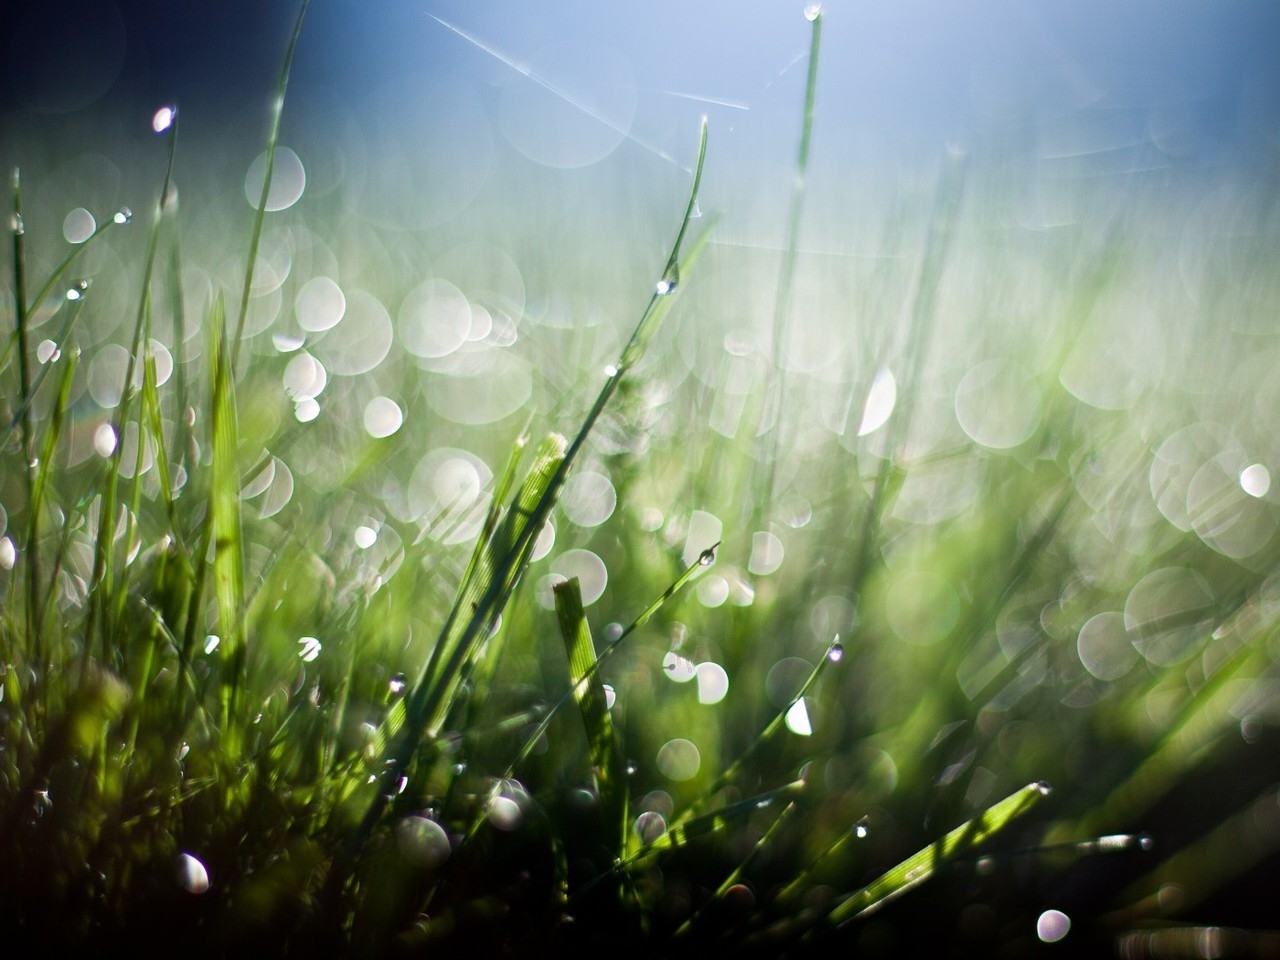 Grass Close Up for 1280 x 960 resolution